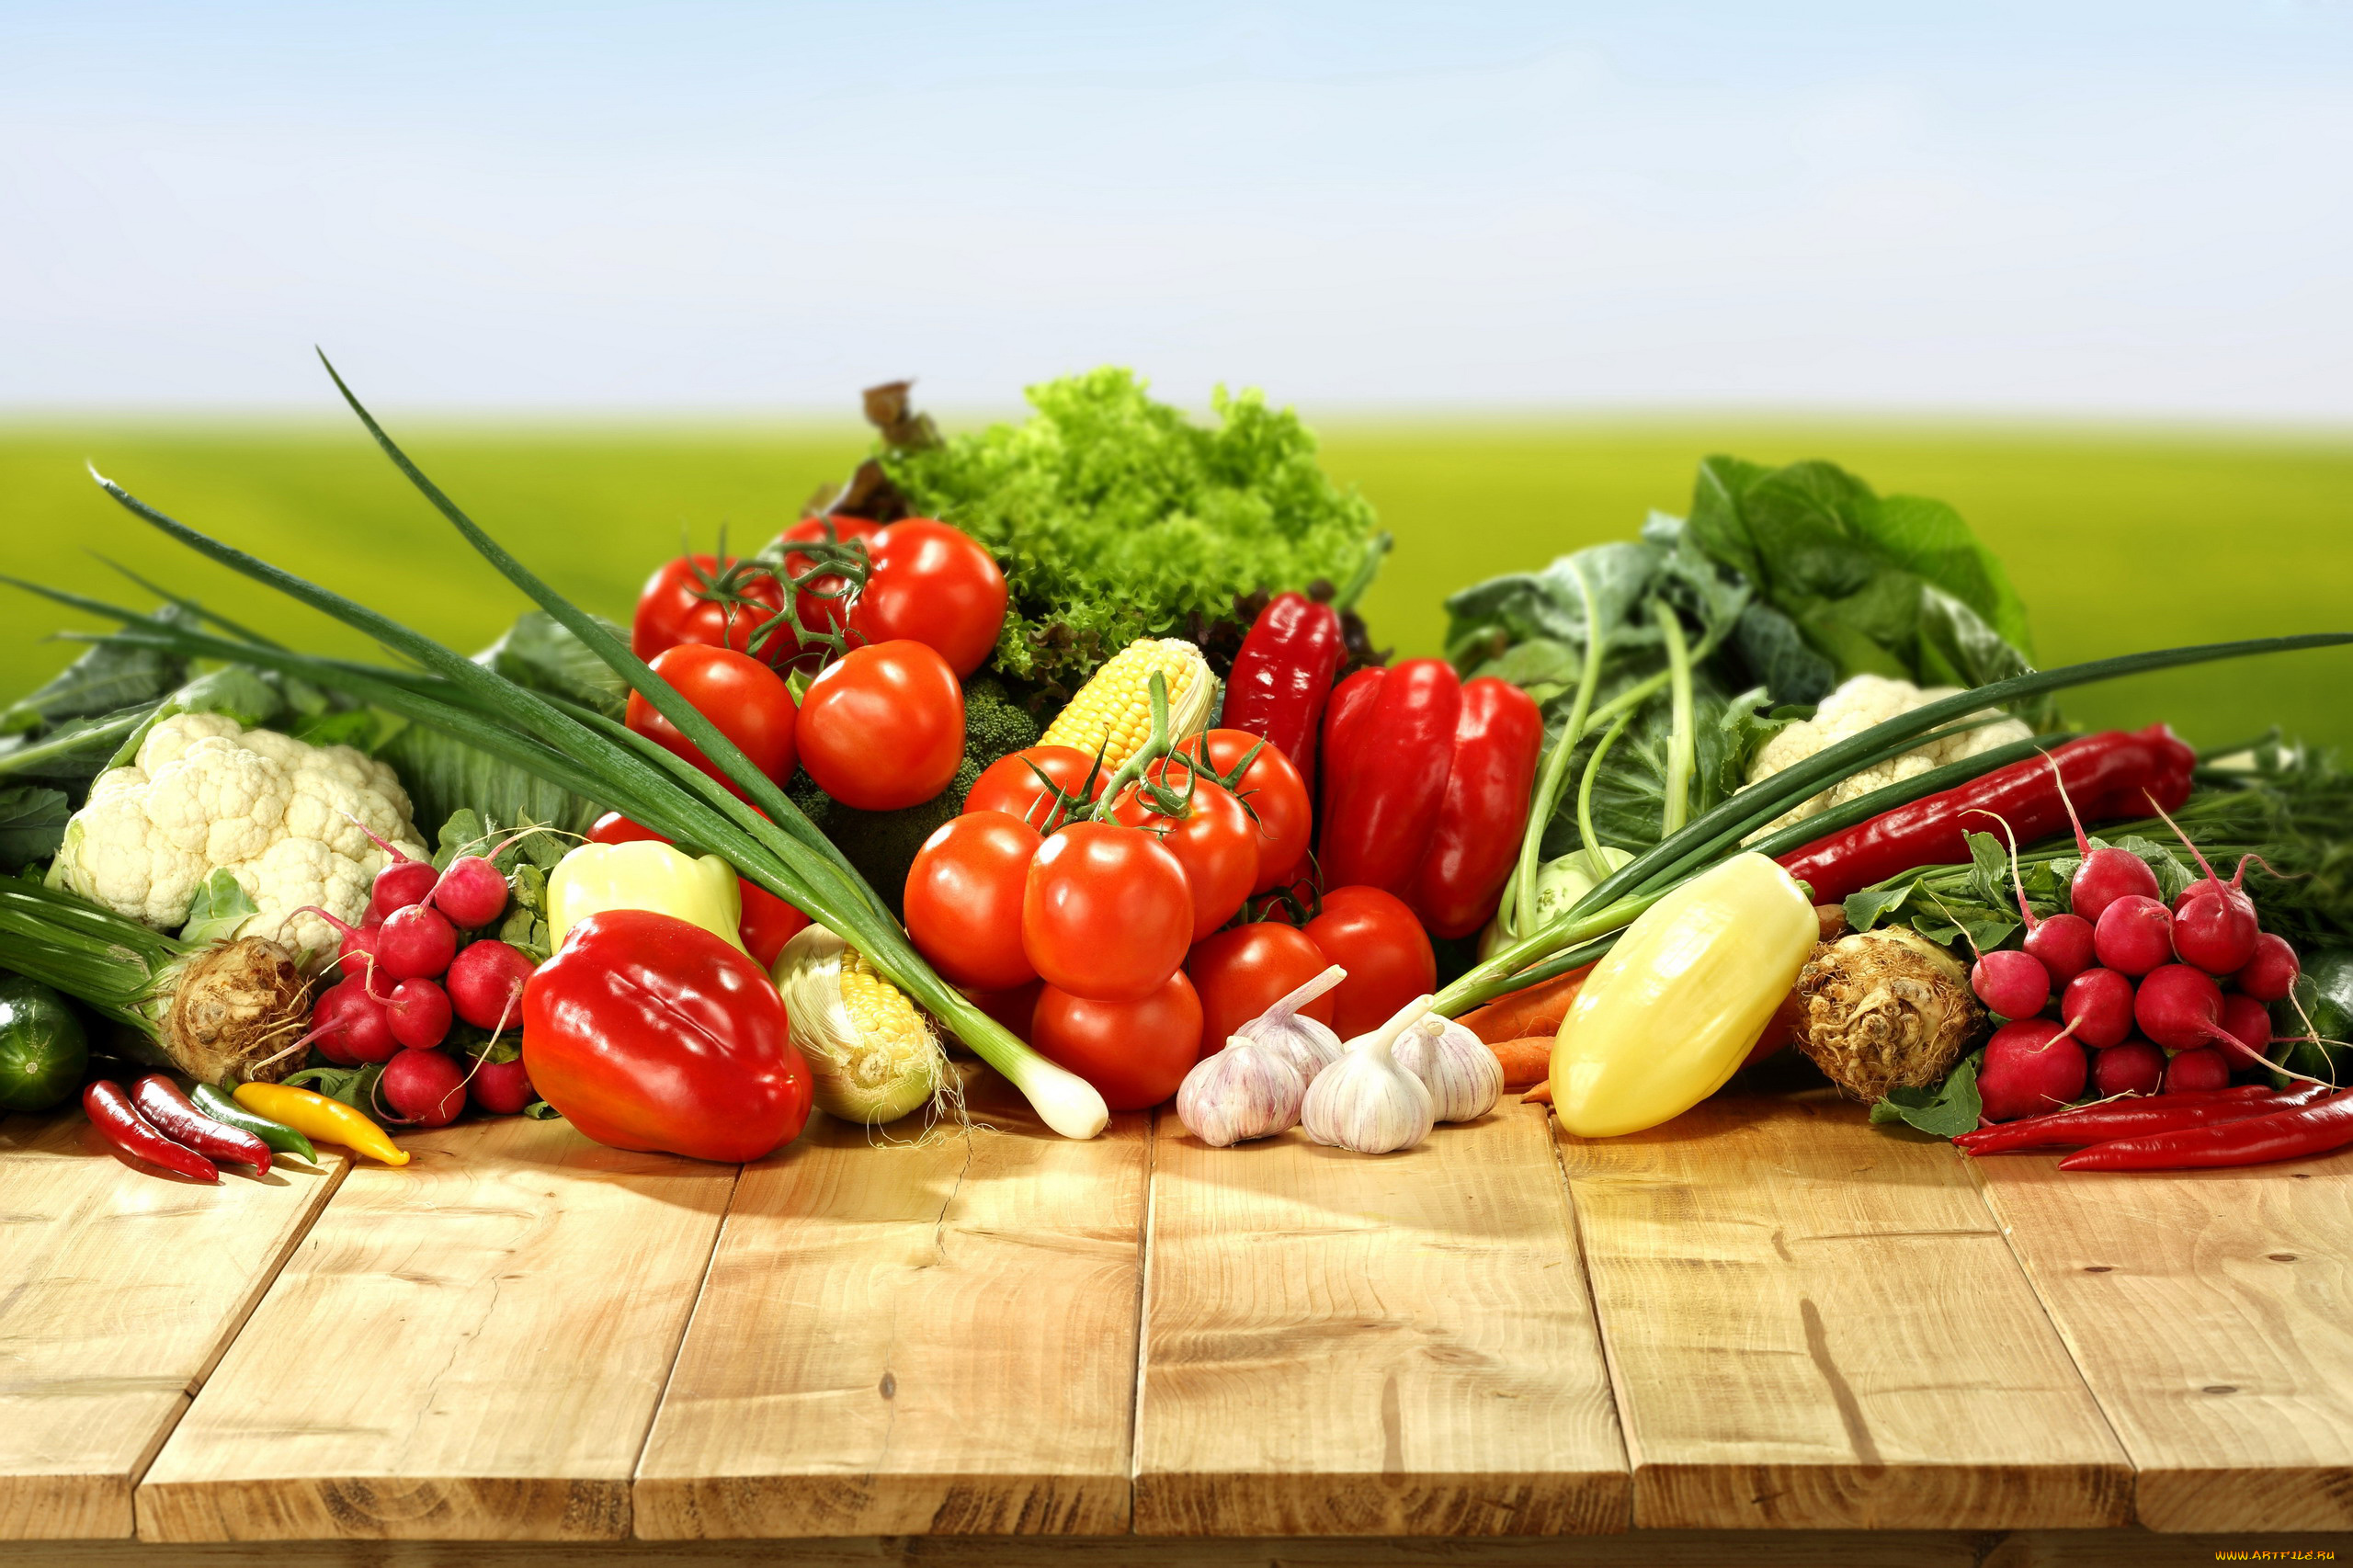 еда, овощи, перец, кукуруза, редис, кольраби, капуста, помидоры, лук, томаты